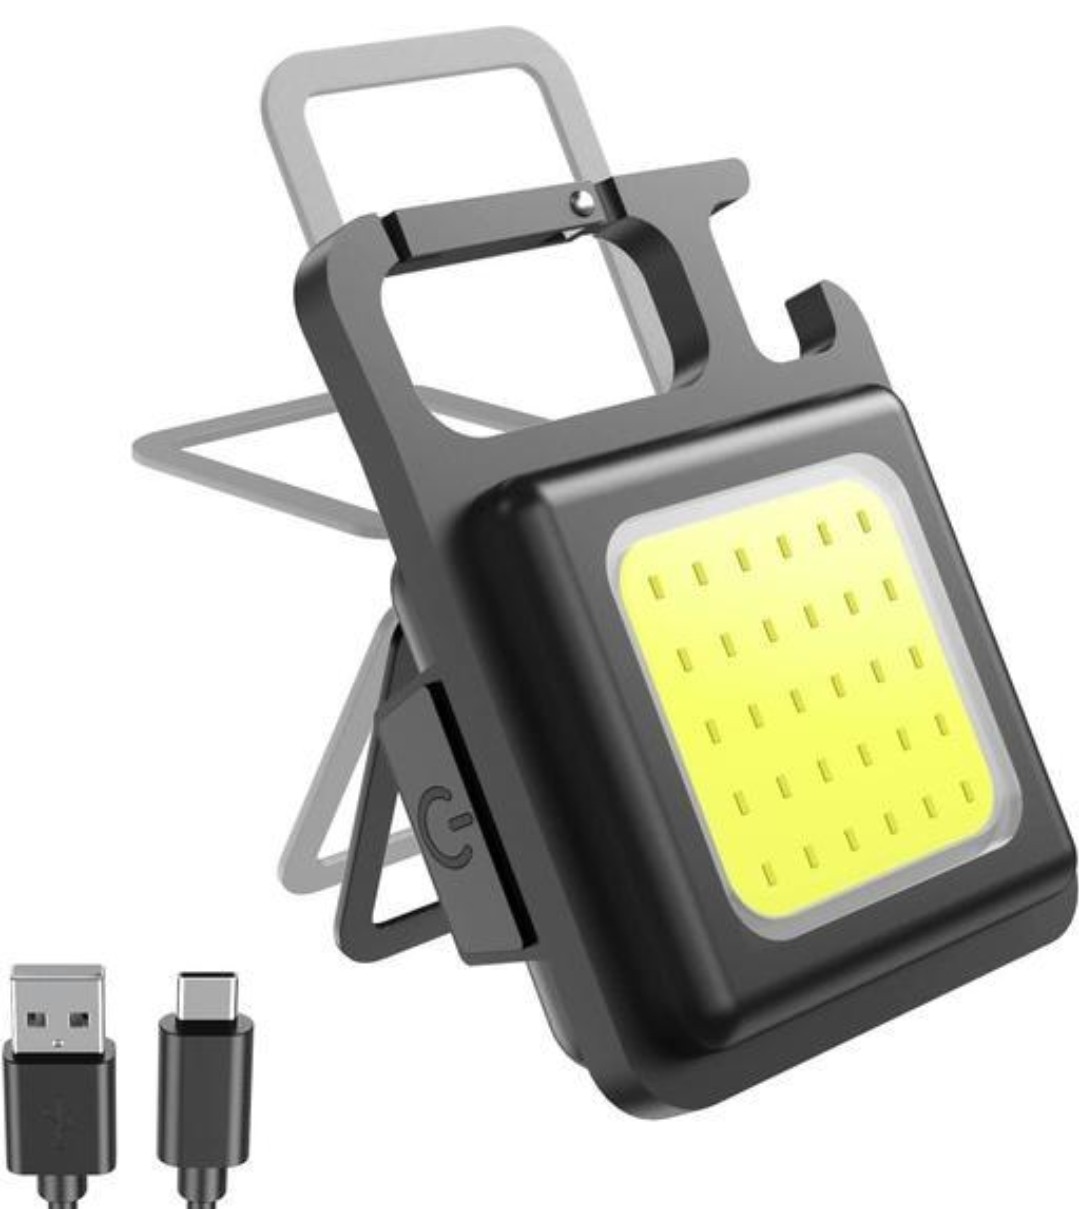 Rechargeable Emergency LED Light Keychain , 800 Lumens Bright Light with 3 Light Modes,Magnetic Base,Bottle Opener, Portable Flashlight